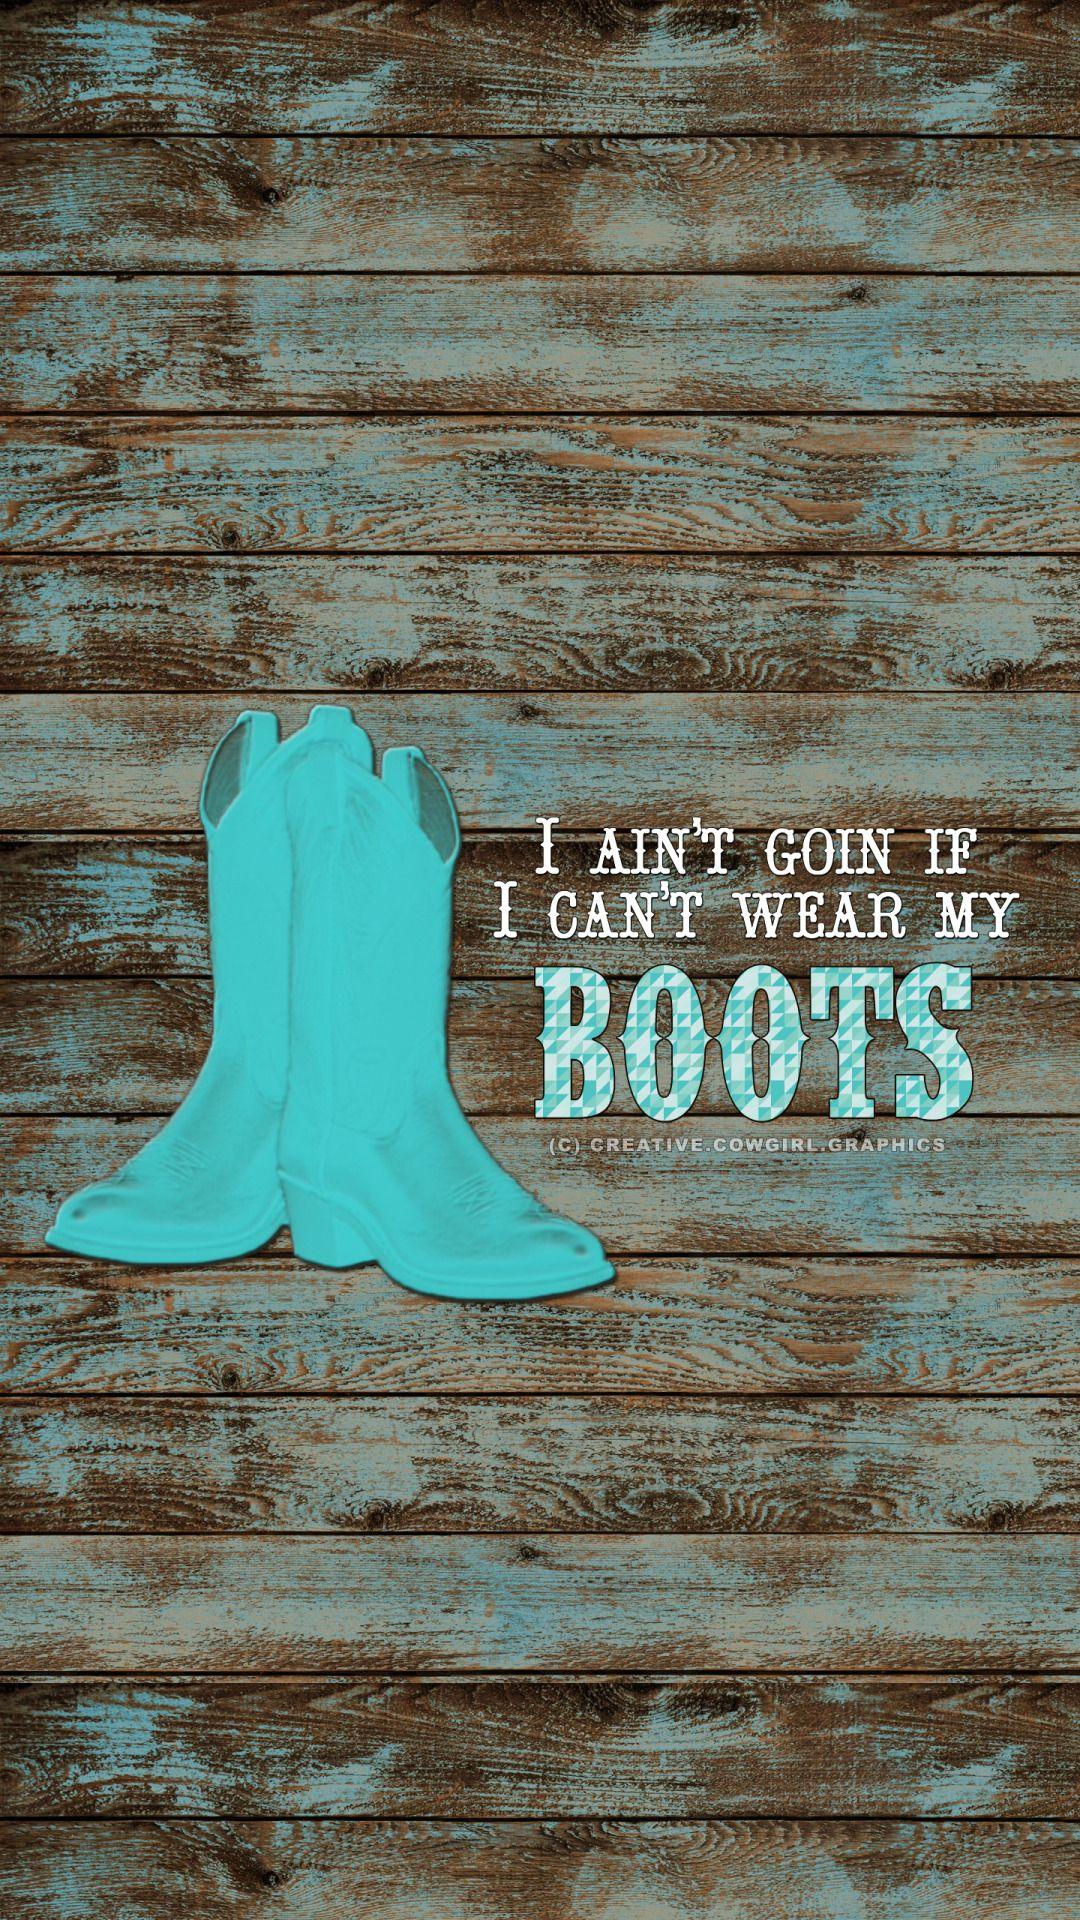 Cowboy Boots Images  Free Download on Freepik